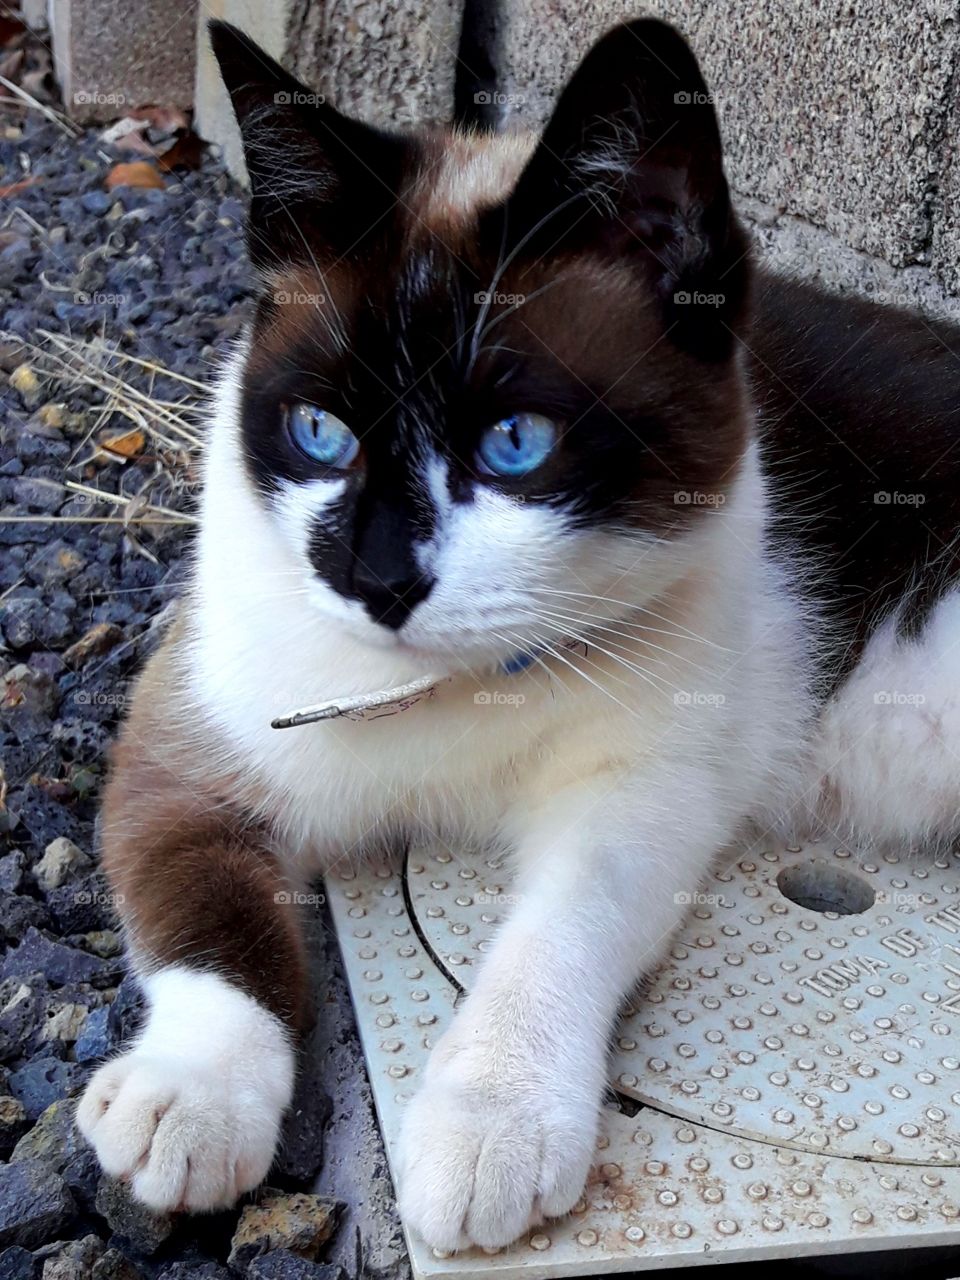 blue eyes kitty admiring a magic garden